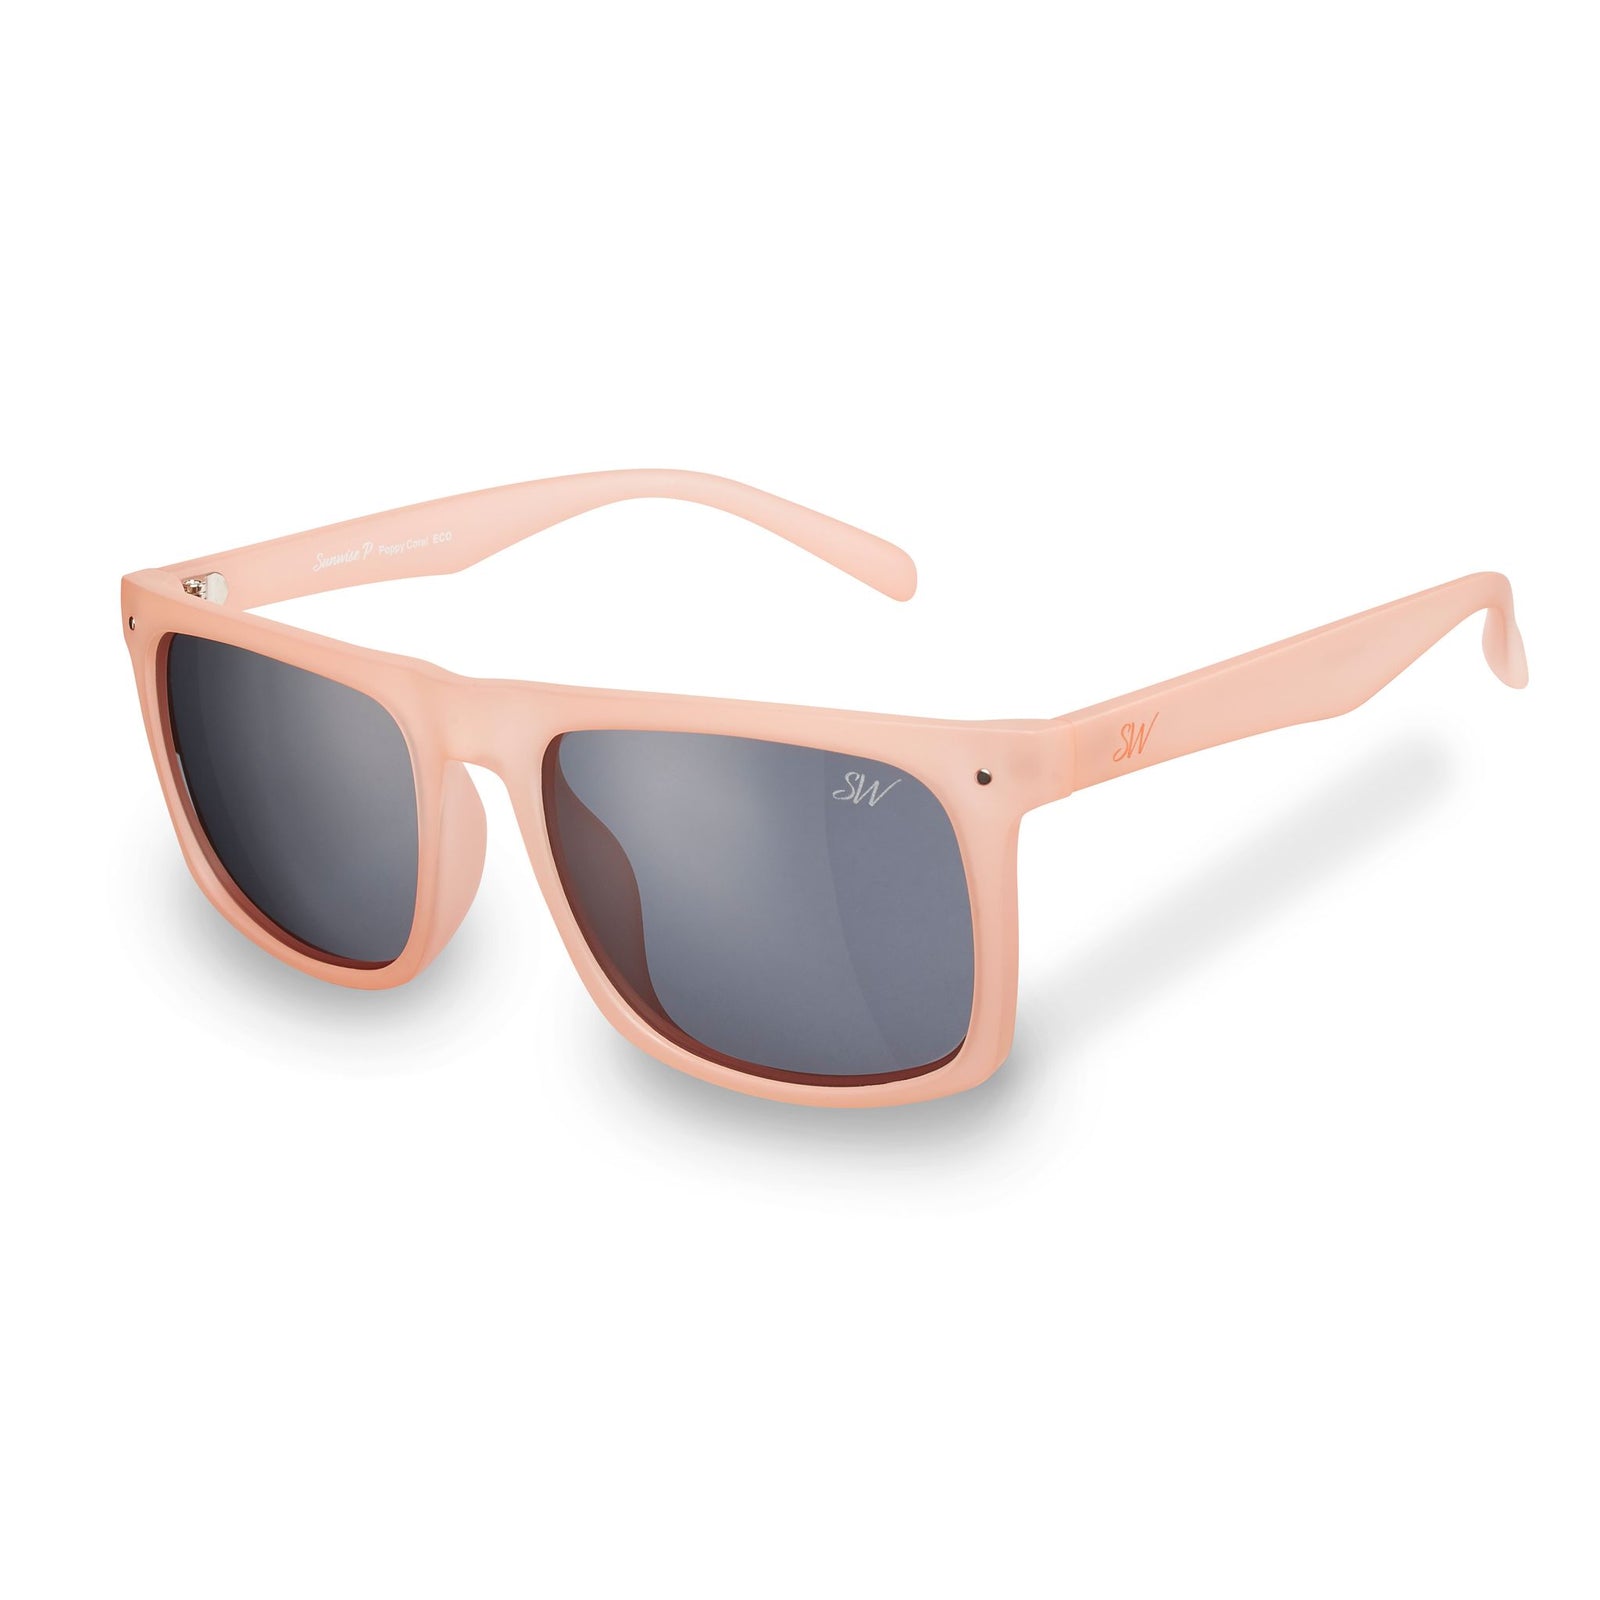 Poppy Lifestyle Sunglasses